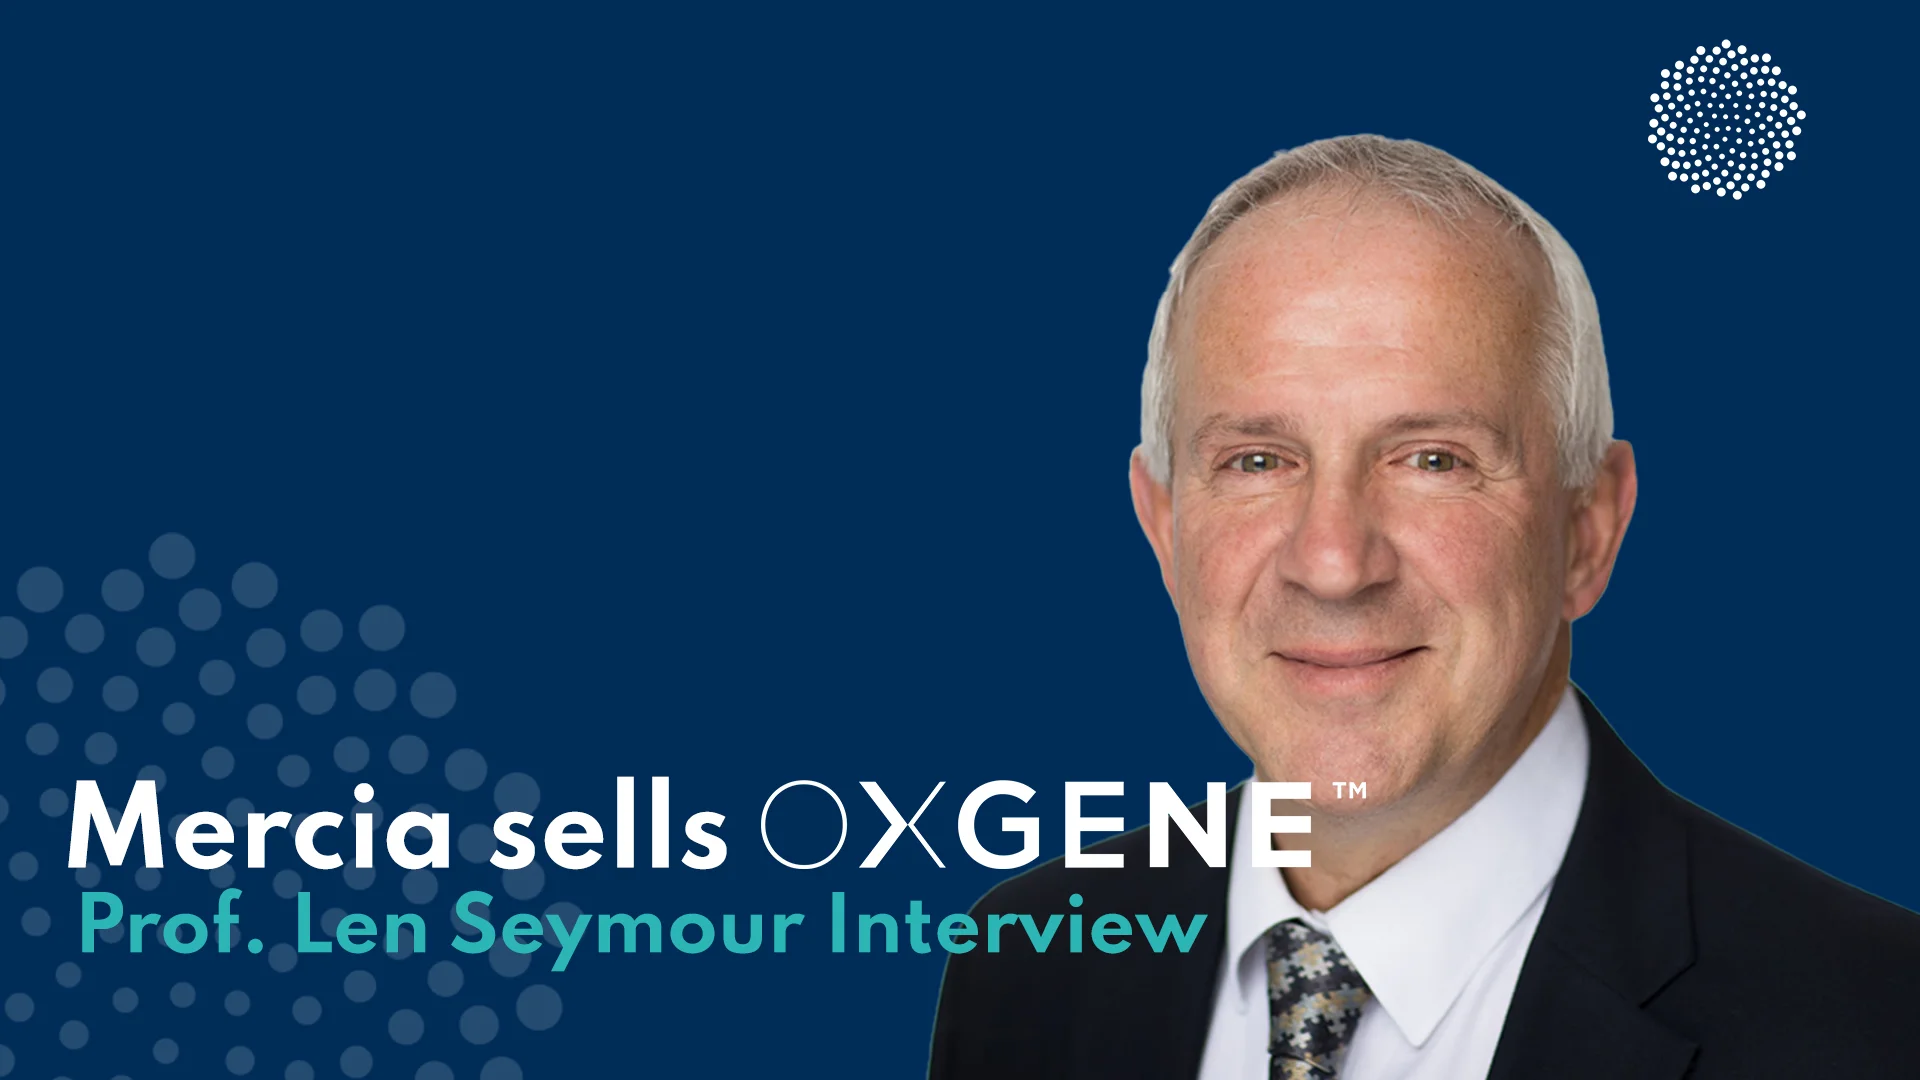 Mercia sells OXGENE - Prof. Len Seymour Interview on Vimeo